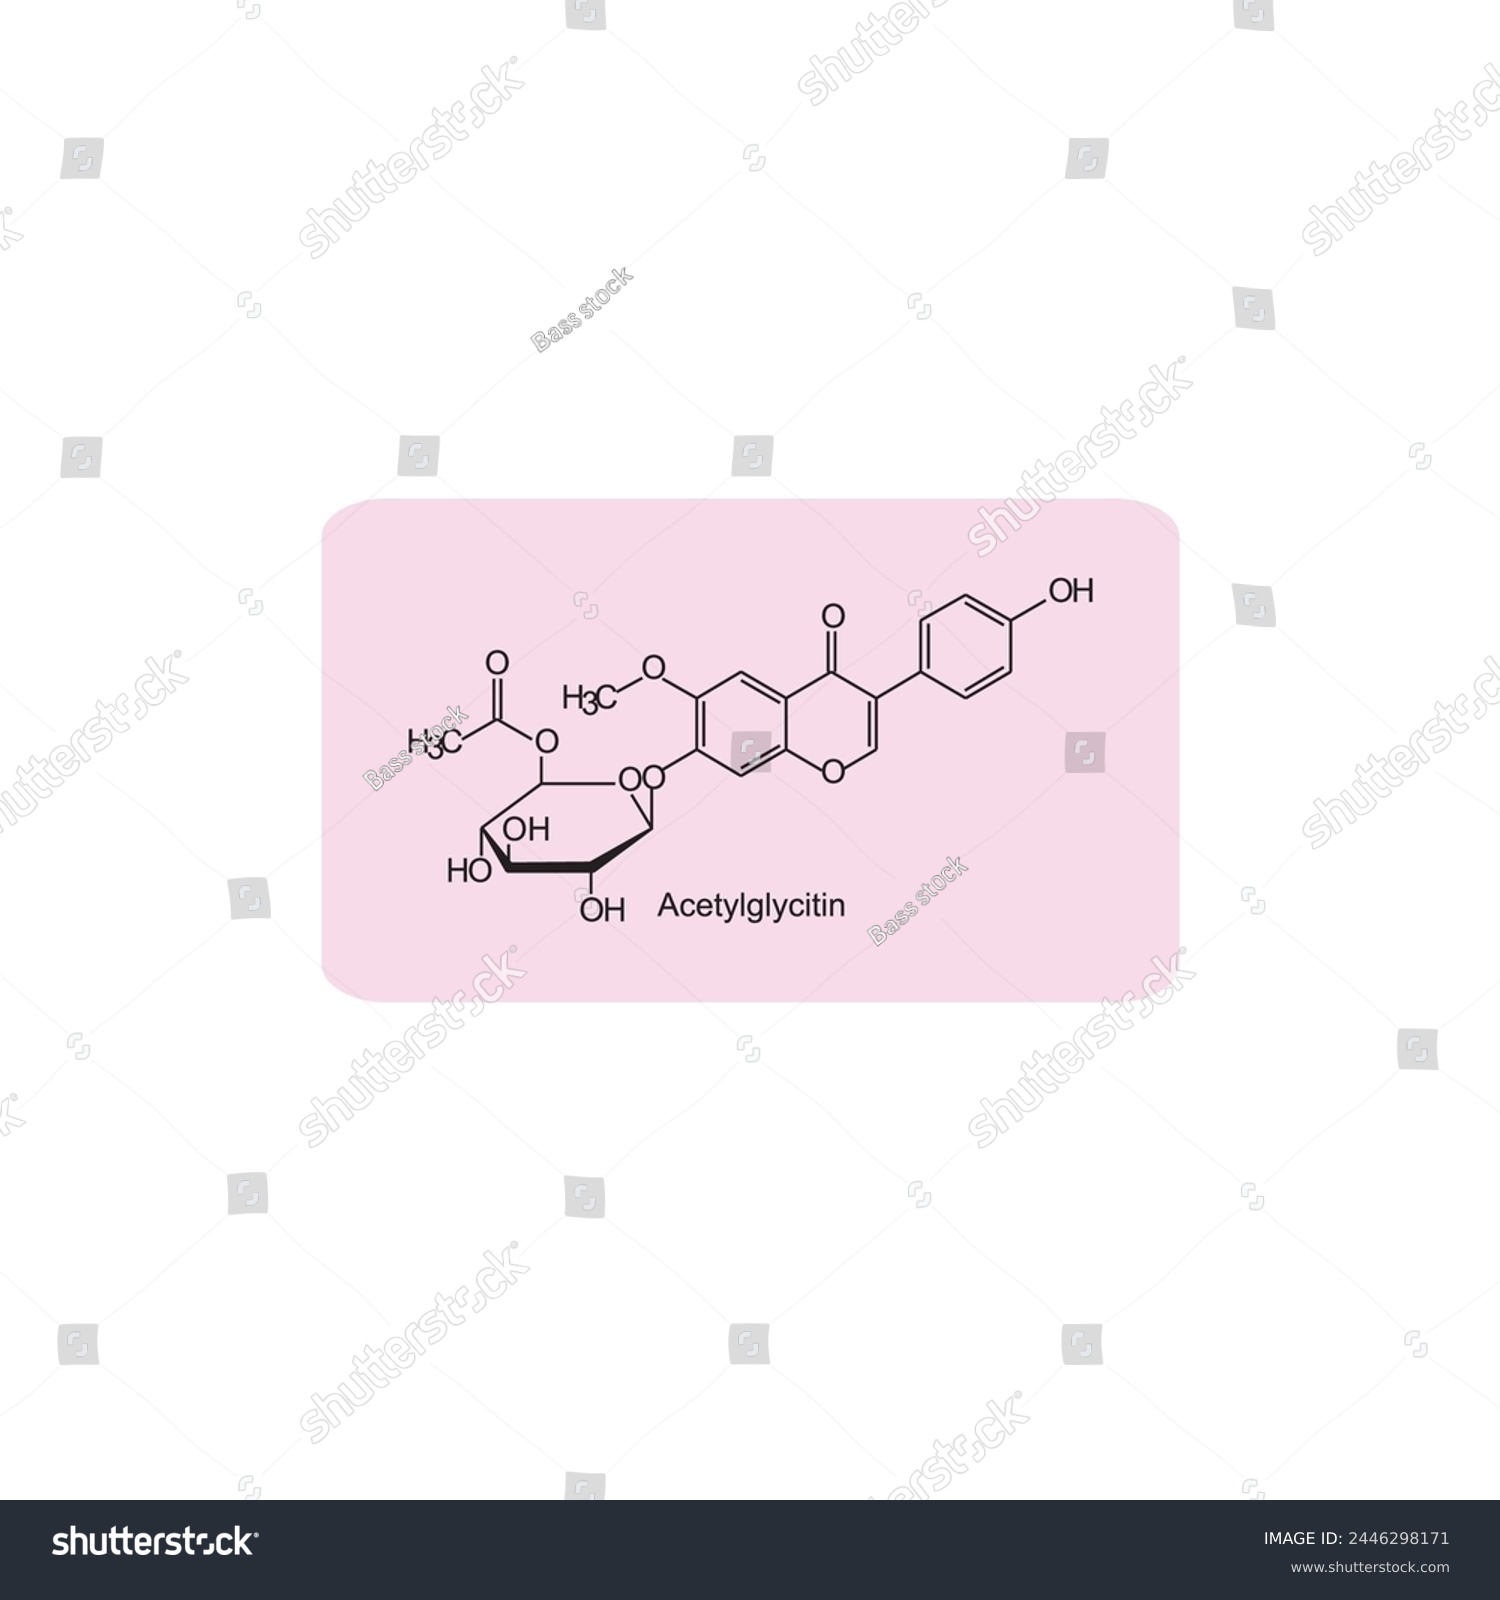 SVG of Acetylglycitin skeletal structure diagram.Isoflavanone compound molecule scientific illustration on pink background. svg